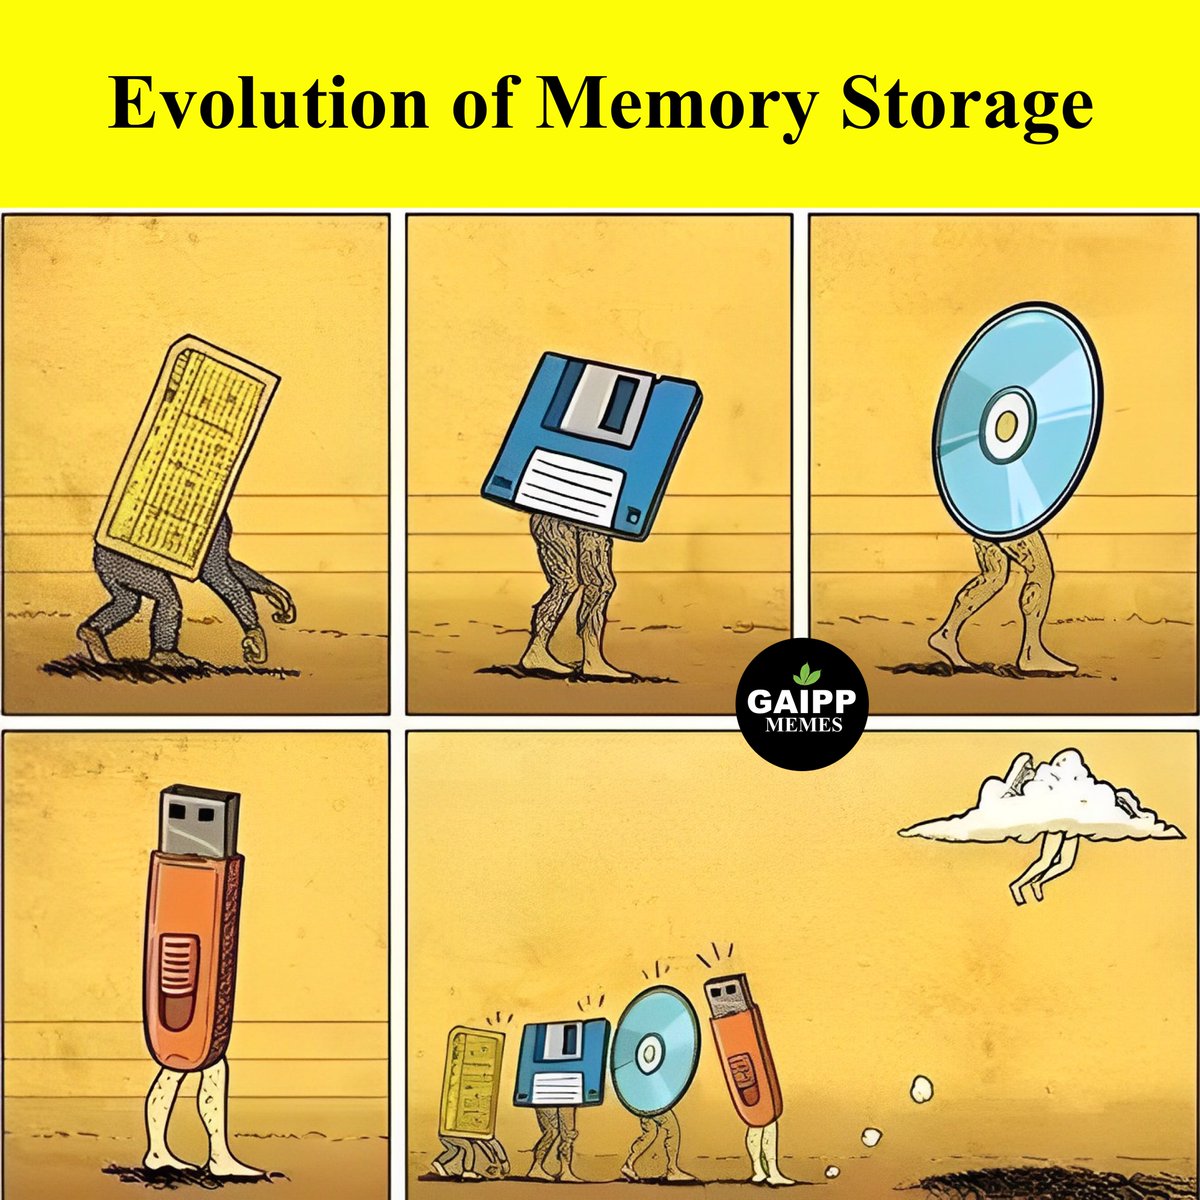 #itmemes #memory #storage #gaipp #gaippmeme #evolutionofinternet #internethistory #evolutionofstorage #itfun